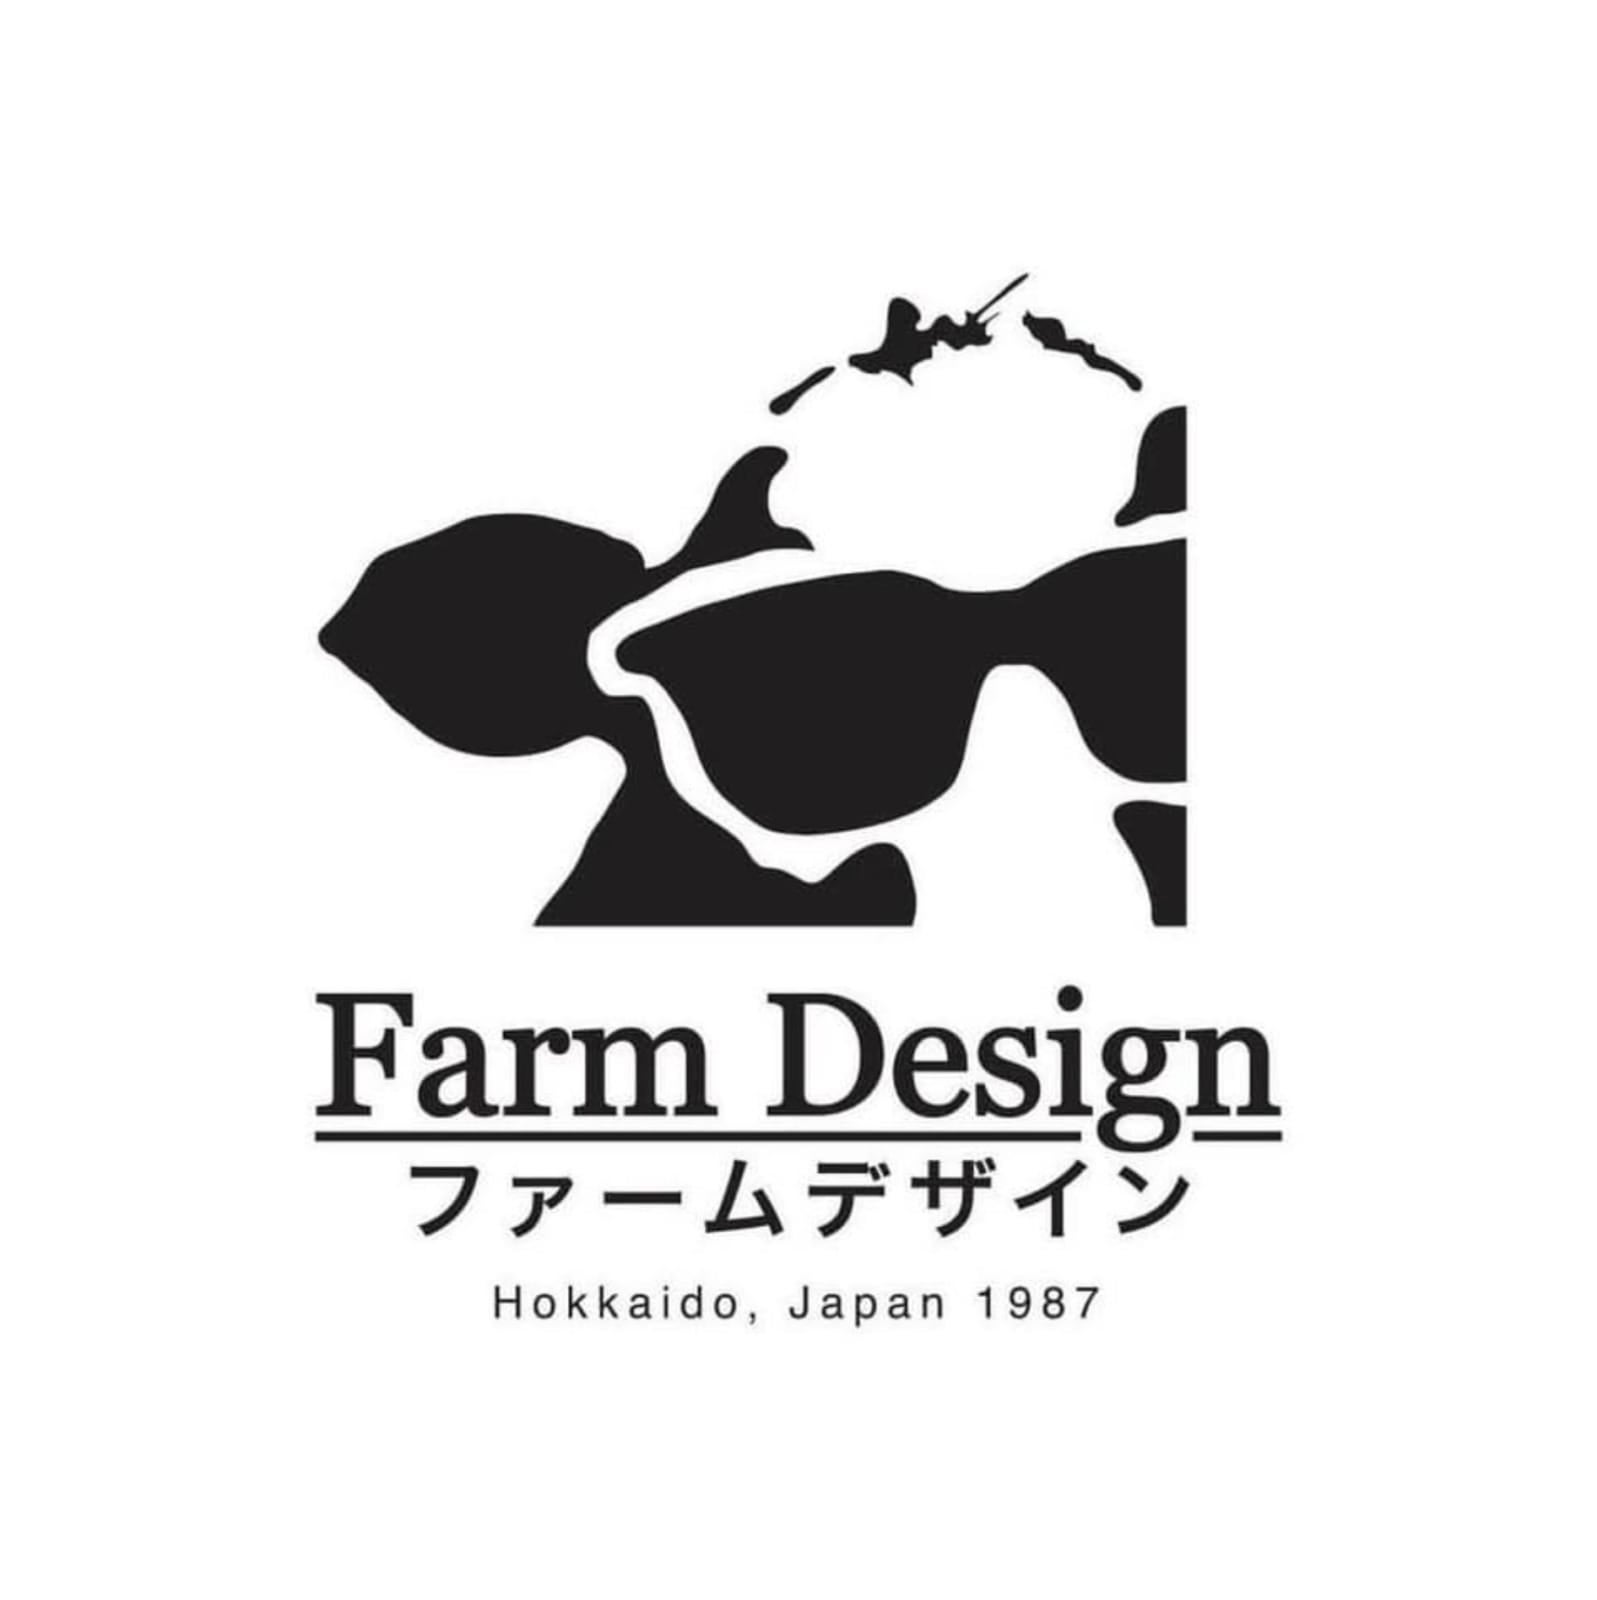 Farm Design Thailand ประกาศปิดกิจการในไทยทุกสาขา